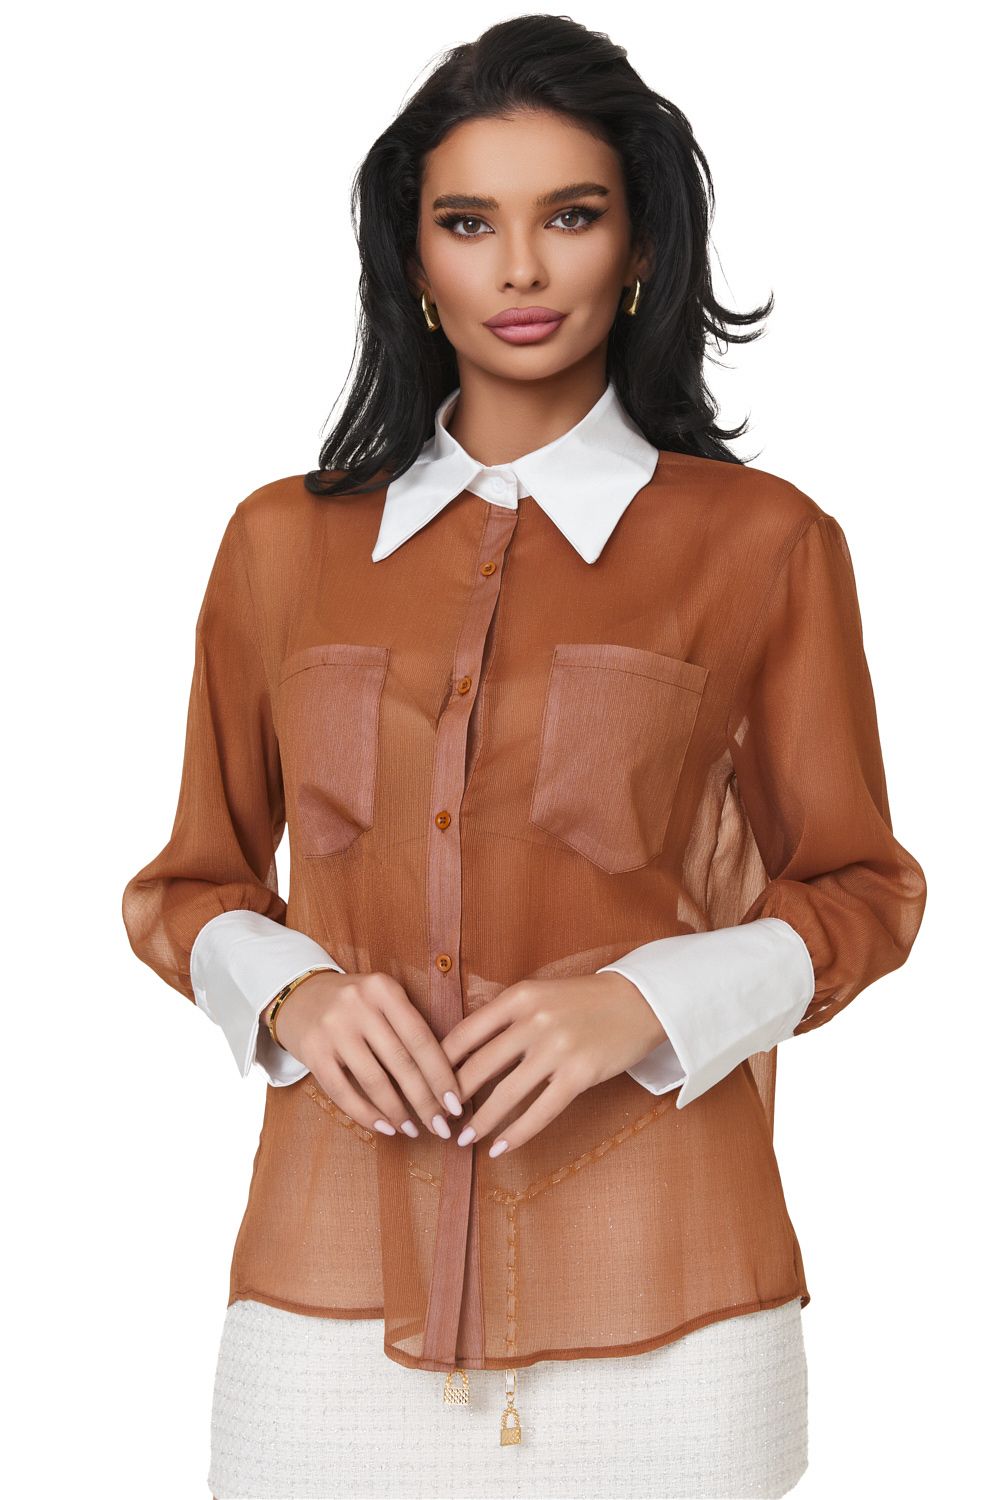 Elegant brown ladies shirt Belezise Bogas